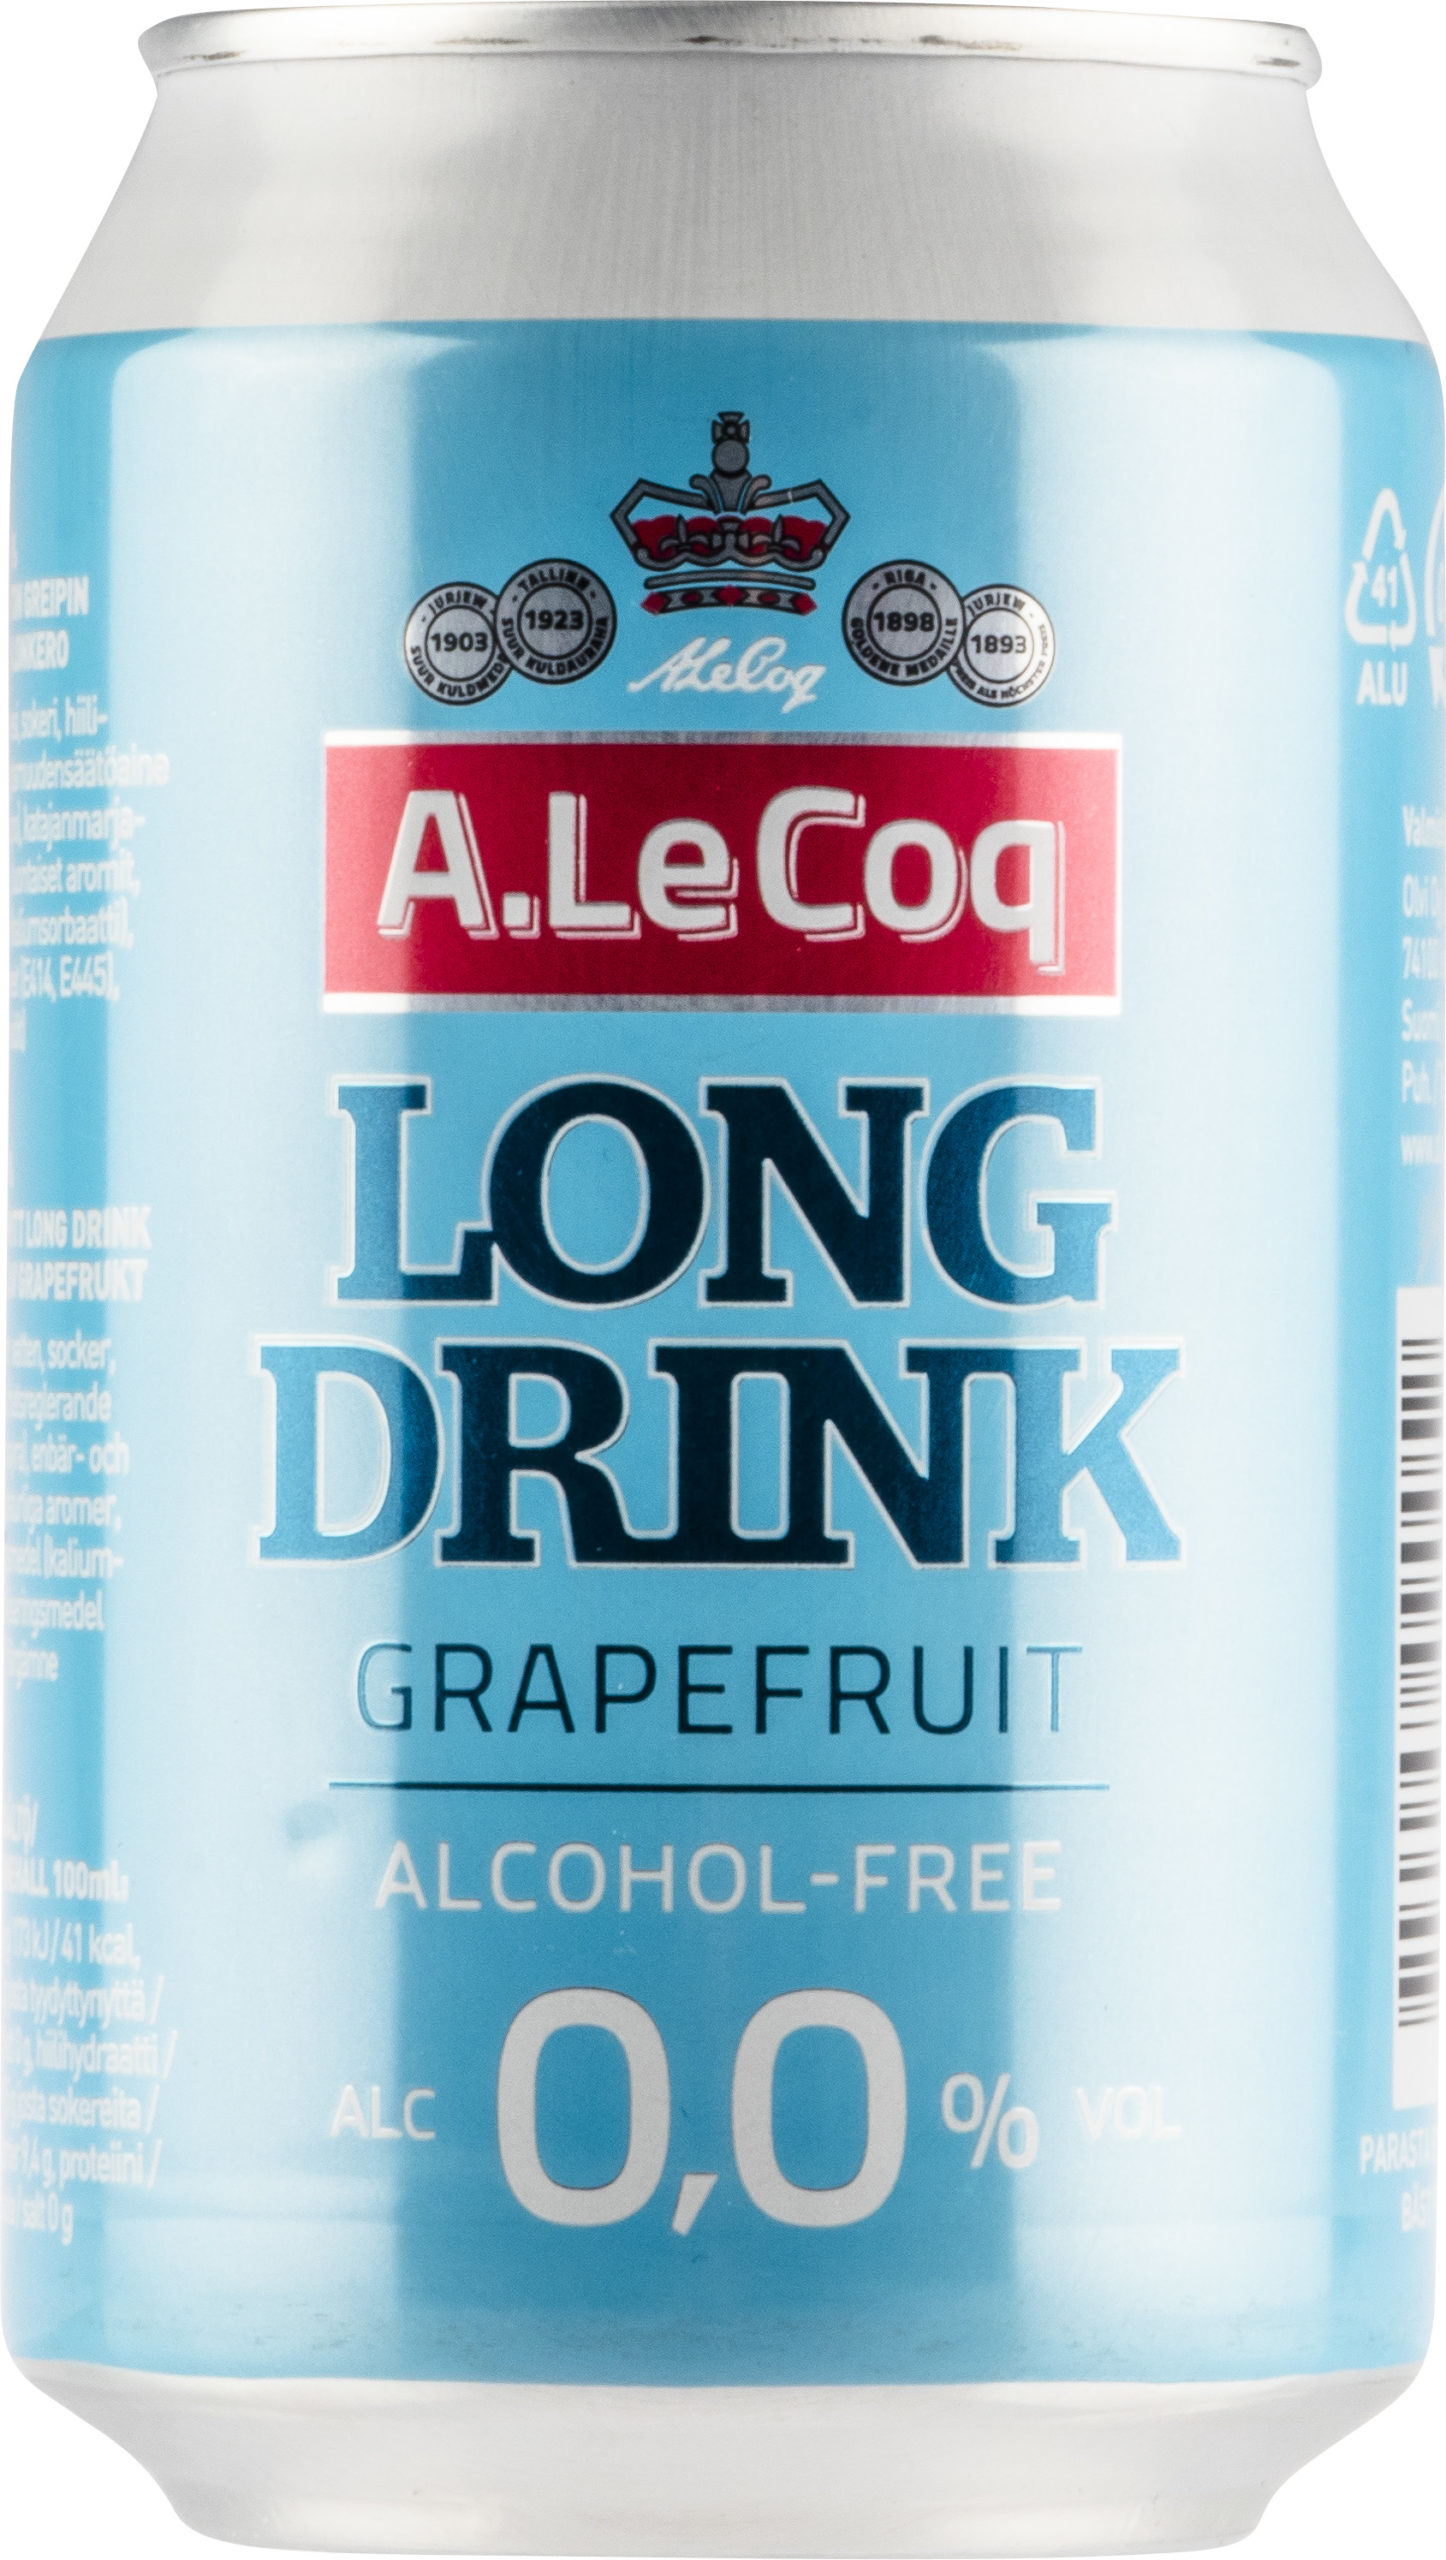 Olvi A Le Coq Long Drink Grapefruit Alcohol-free can